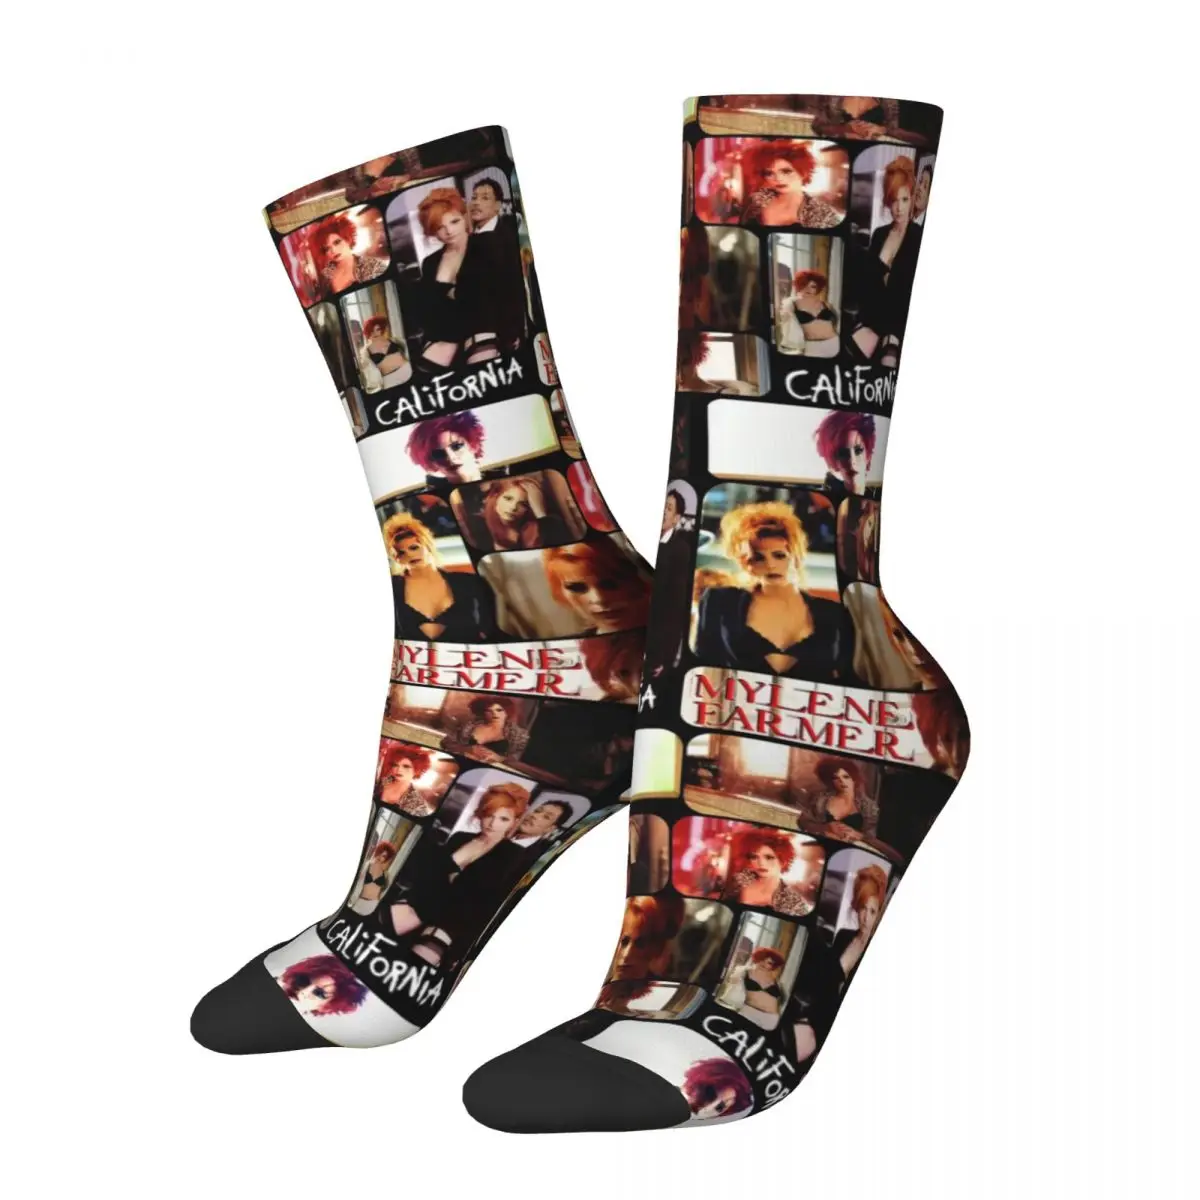 

Casual Mylene Farmer Picture Collage Football Socks Super Soft Long Stuff Christmas Present for Unisex Non-slip